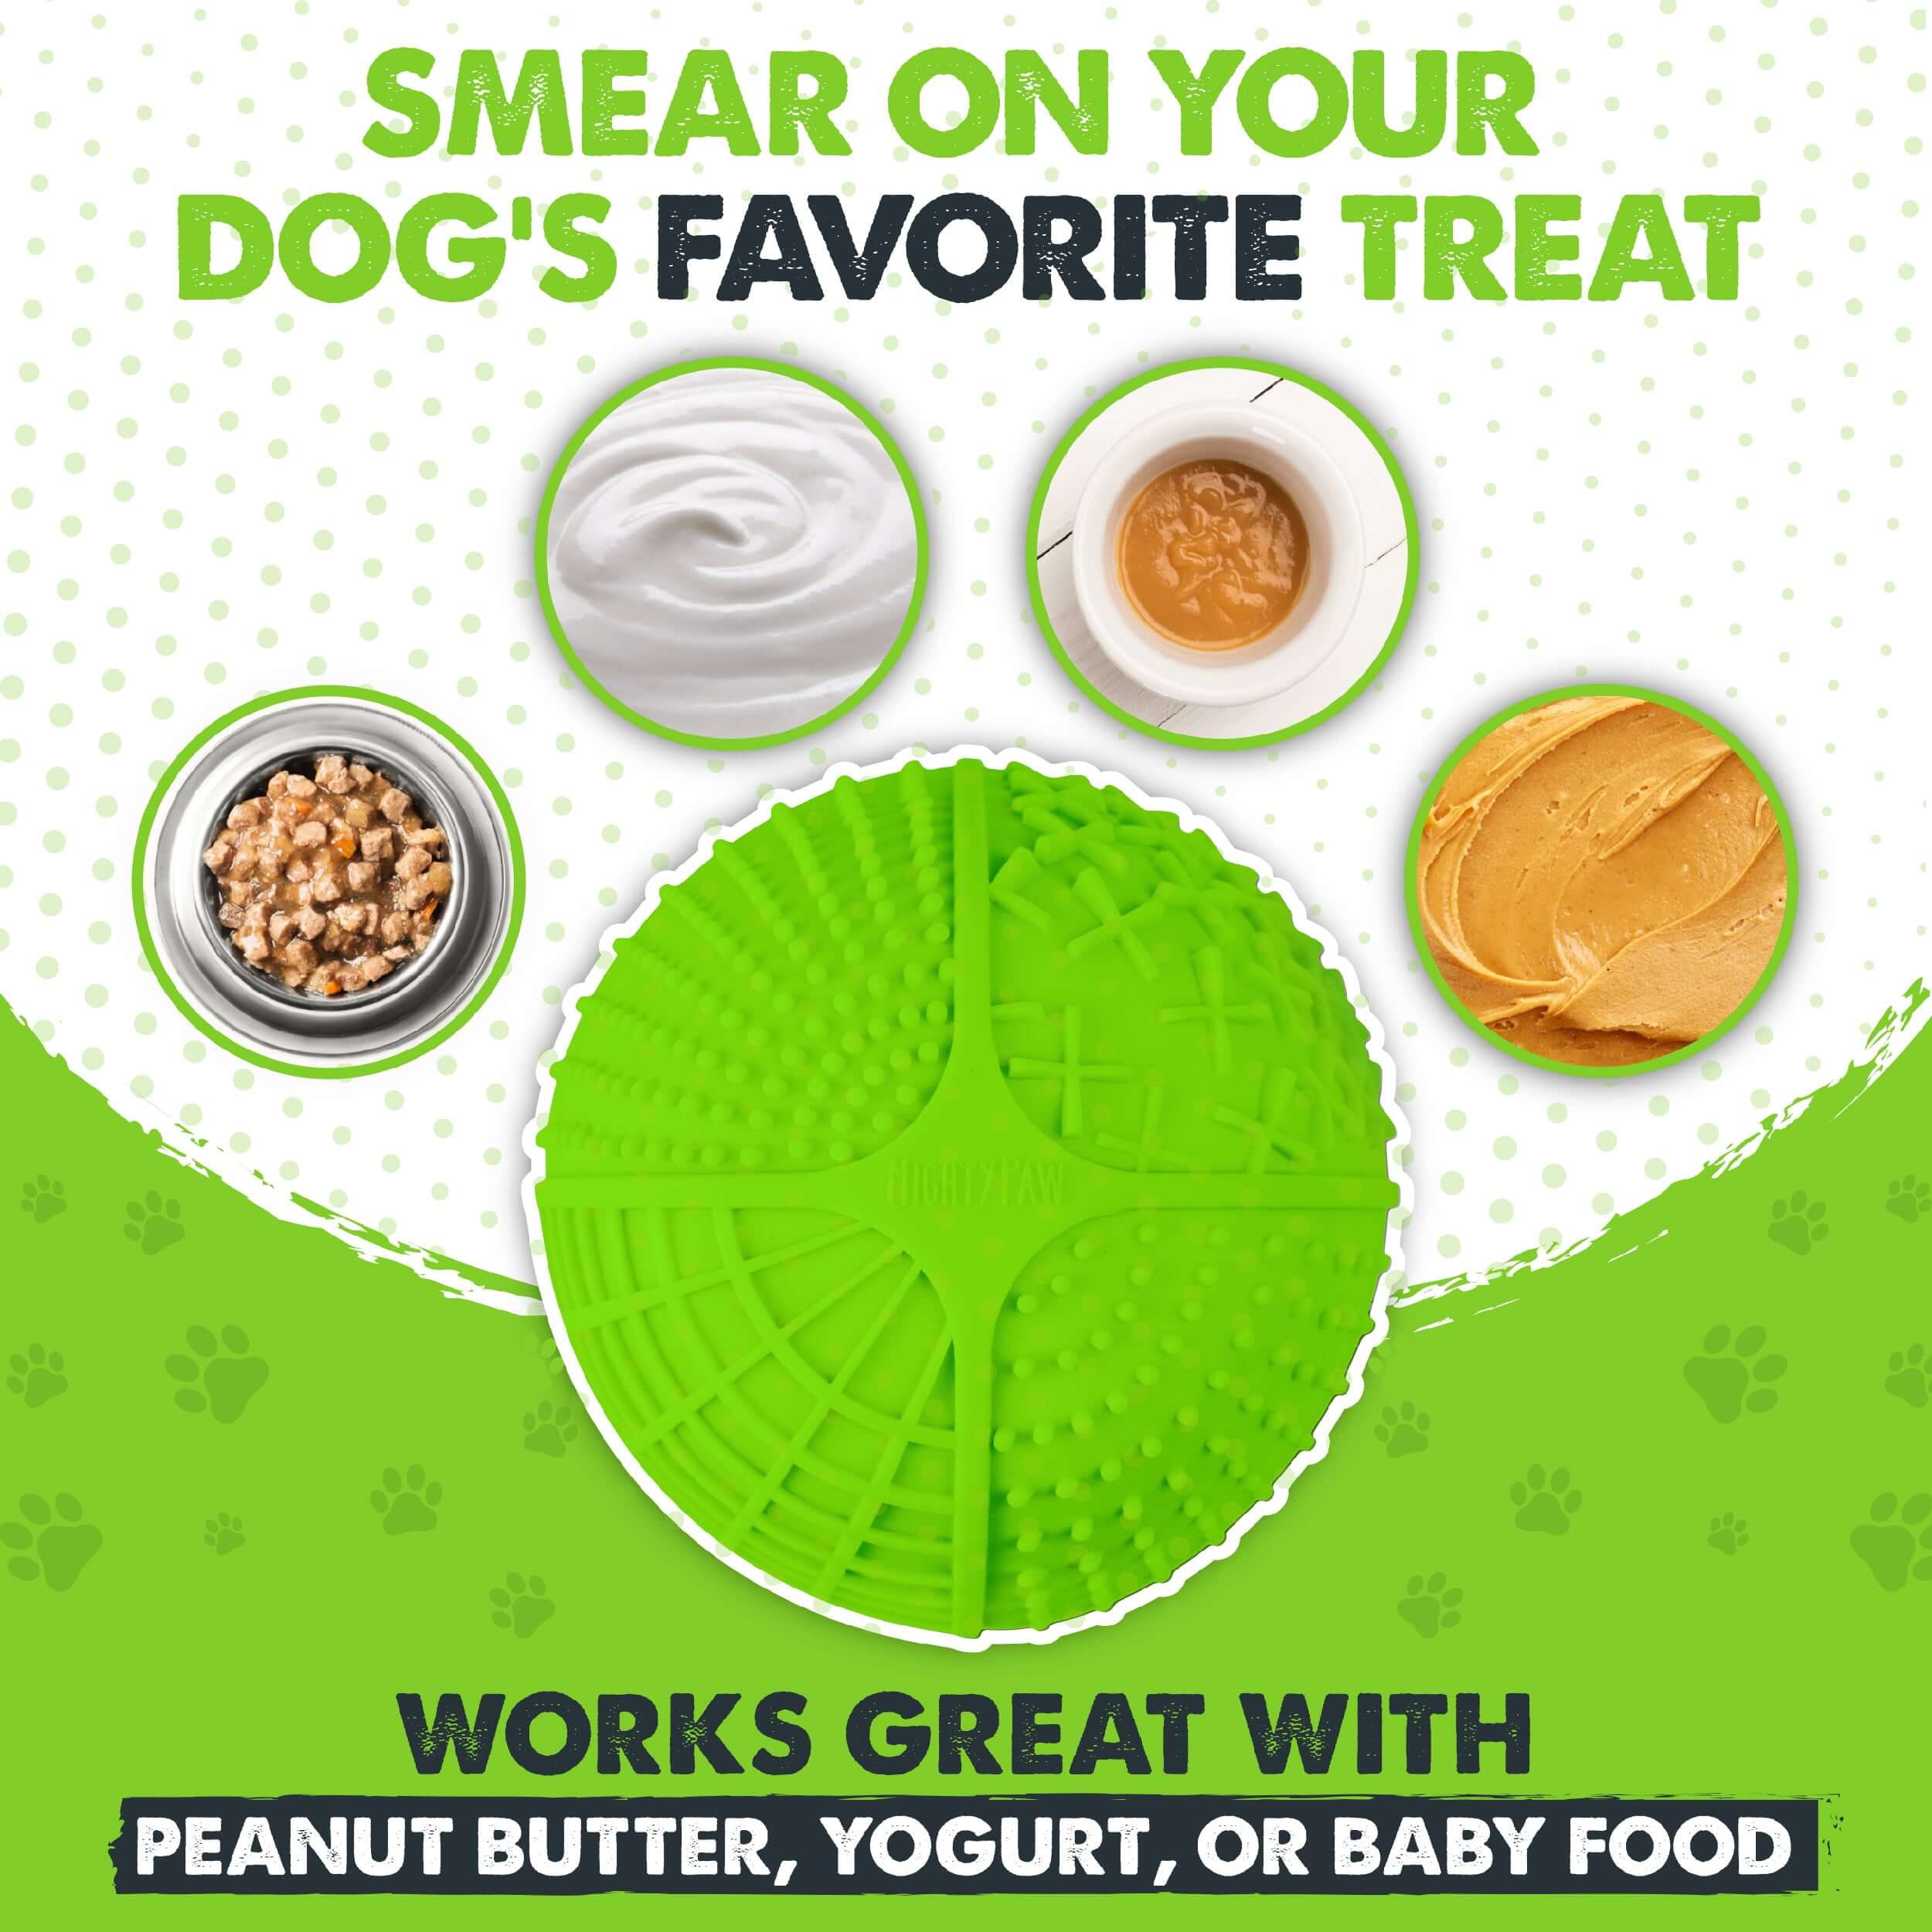 9 Lick Mat Recipe Ideas for your Dog. - Super Feedy